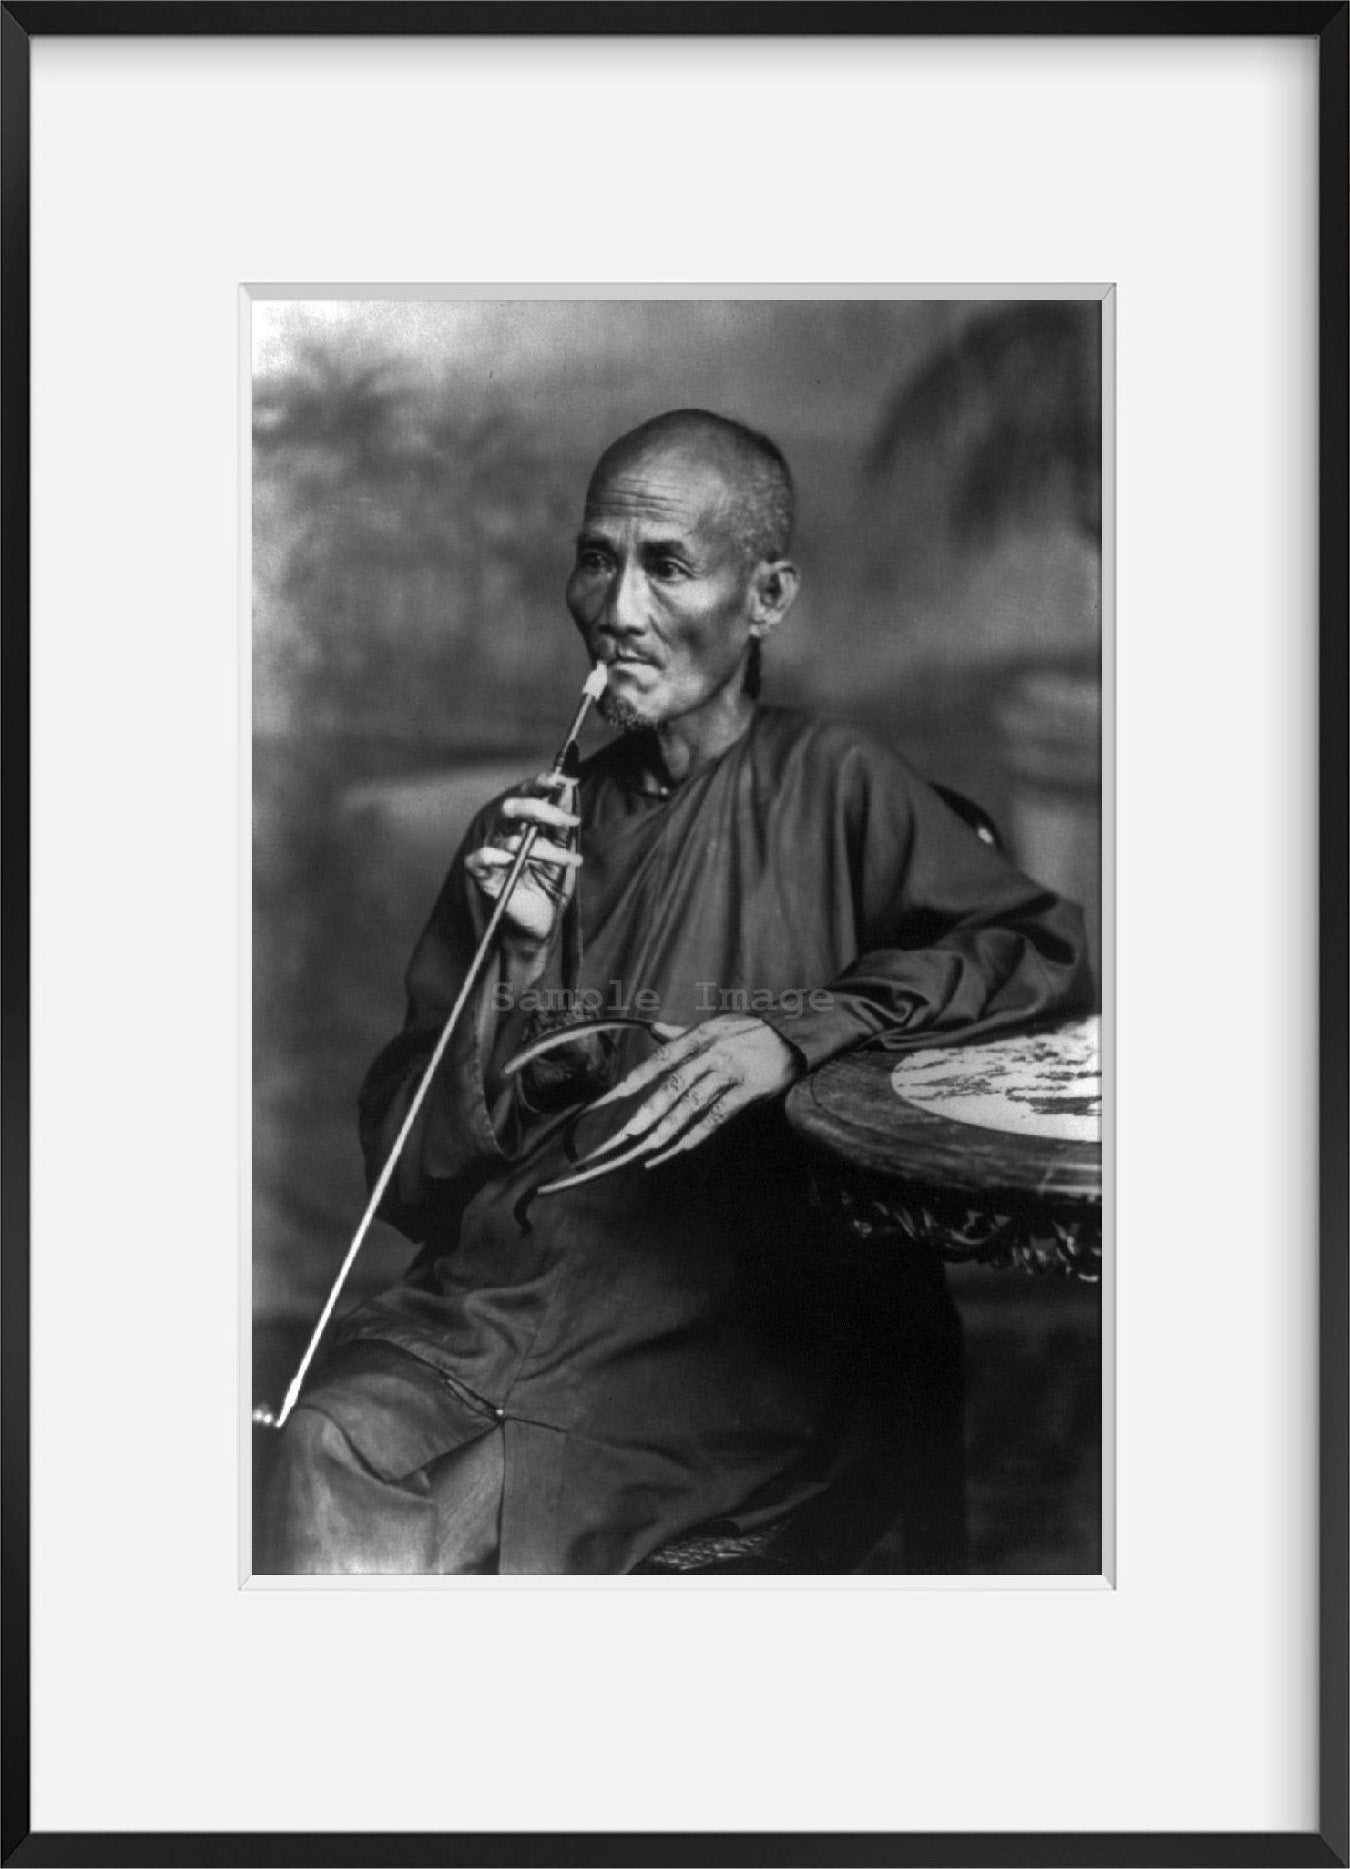 Photo: Old Chinaman, smoking long pipe, c1880, long fingernails